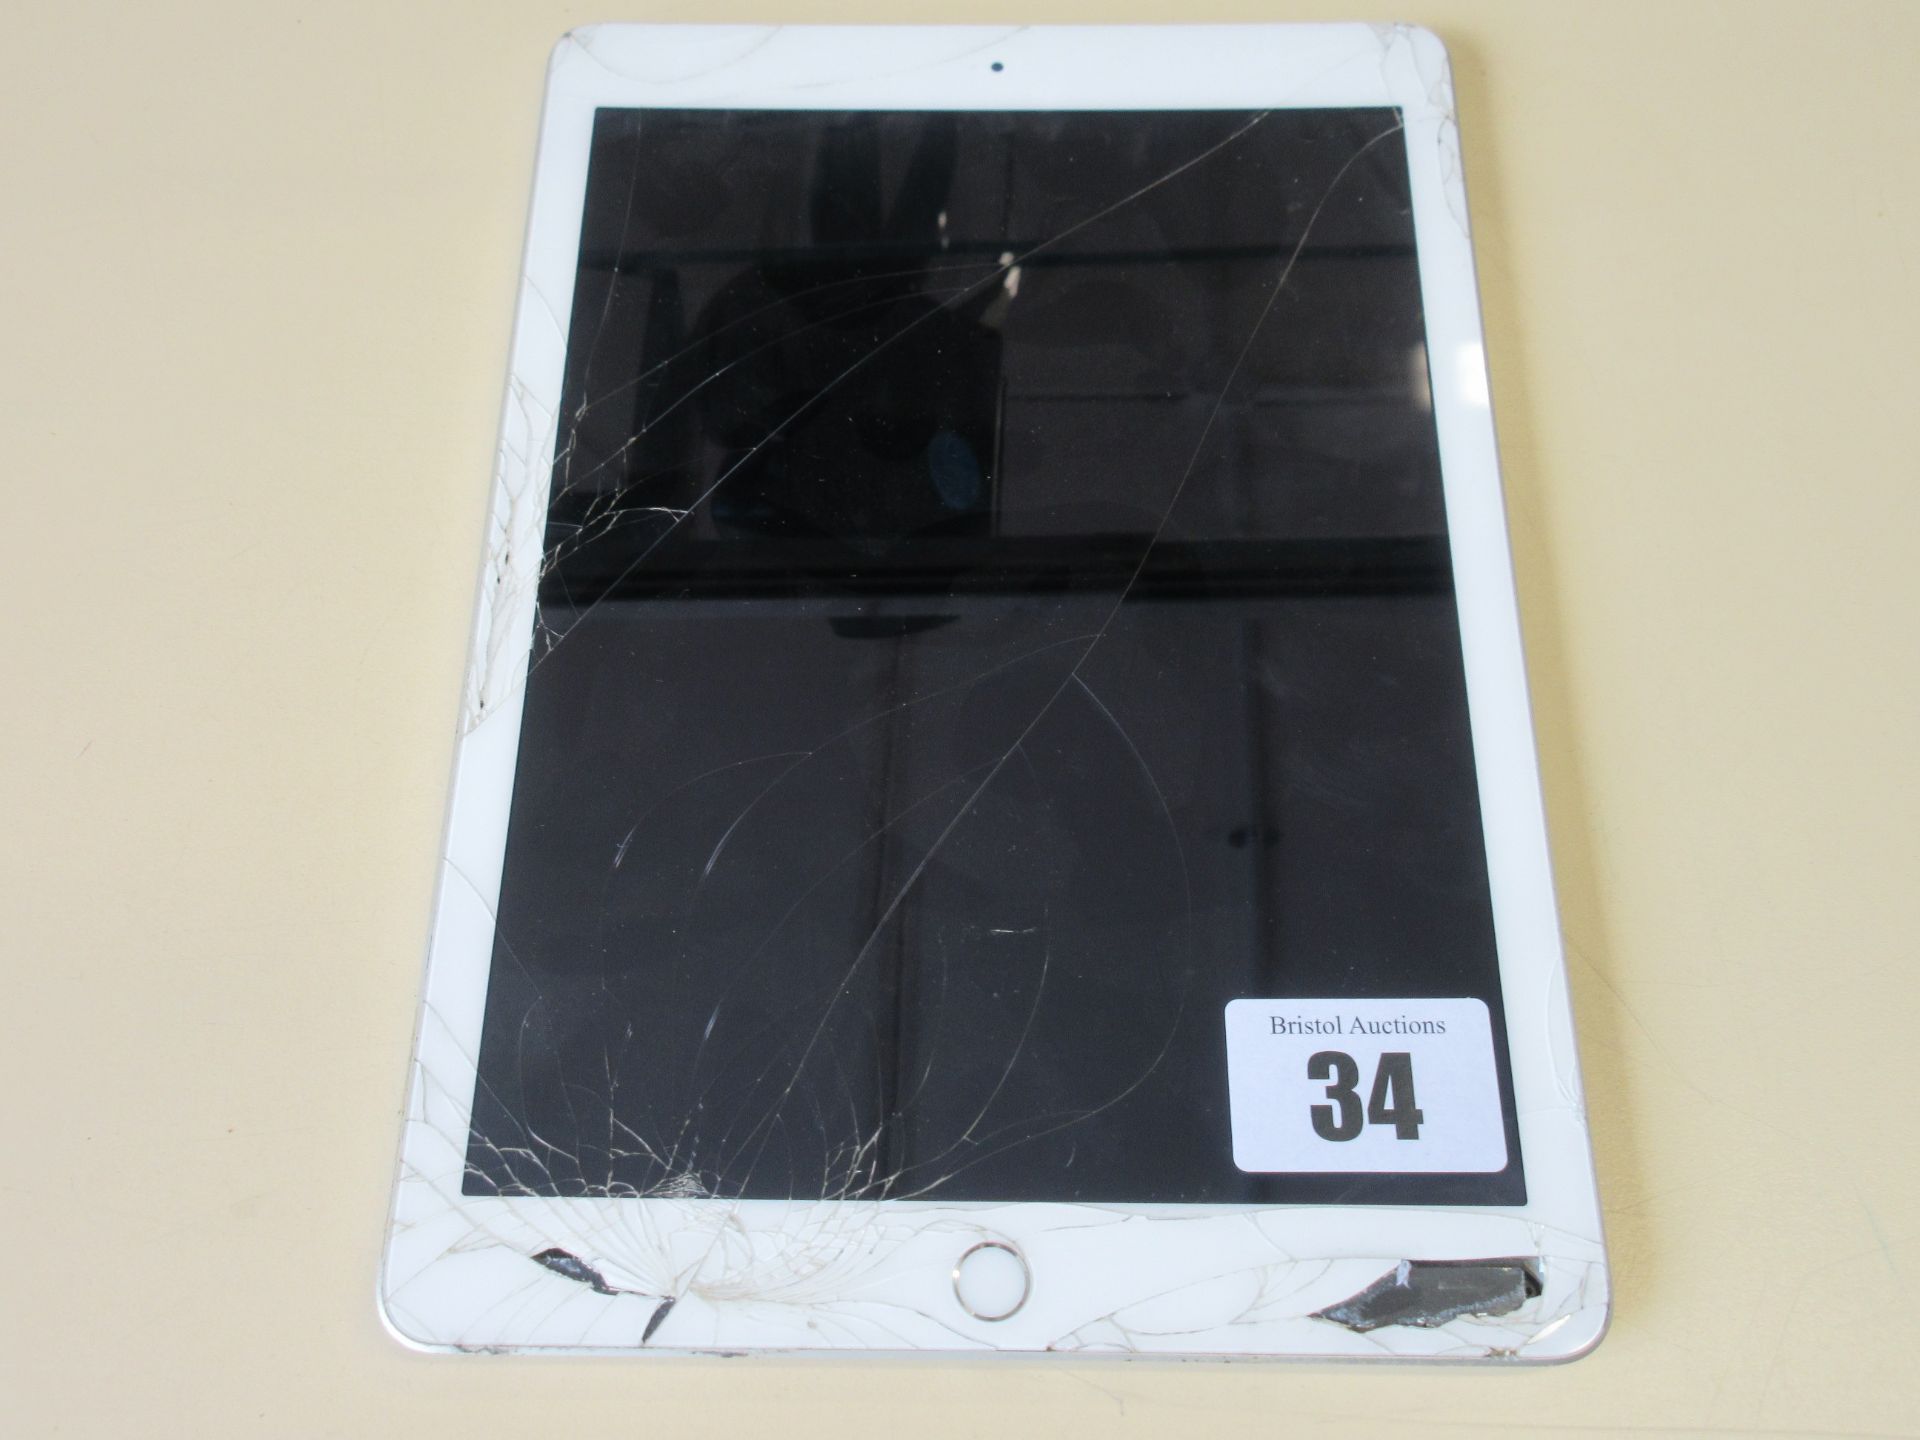 A pre-owned Apple iPad 9.7" 5th Gen (Wi-Fi/Cellular) 32GB in Silver (IMEI: 355806084011247) (